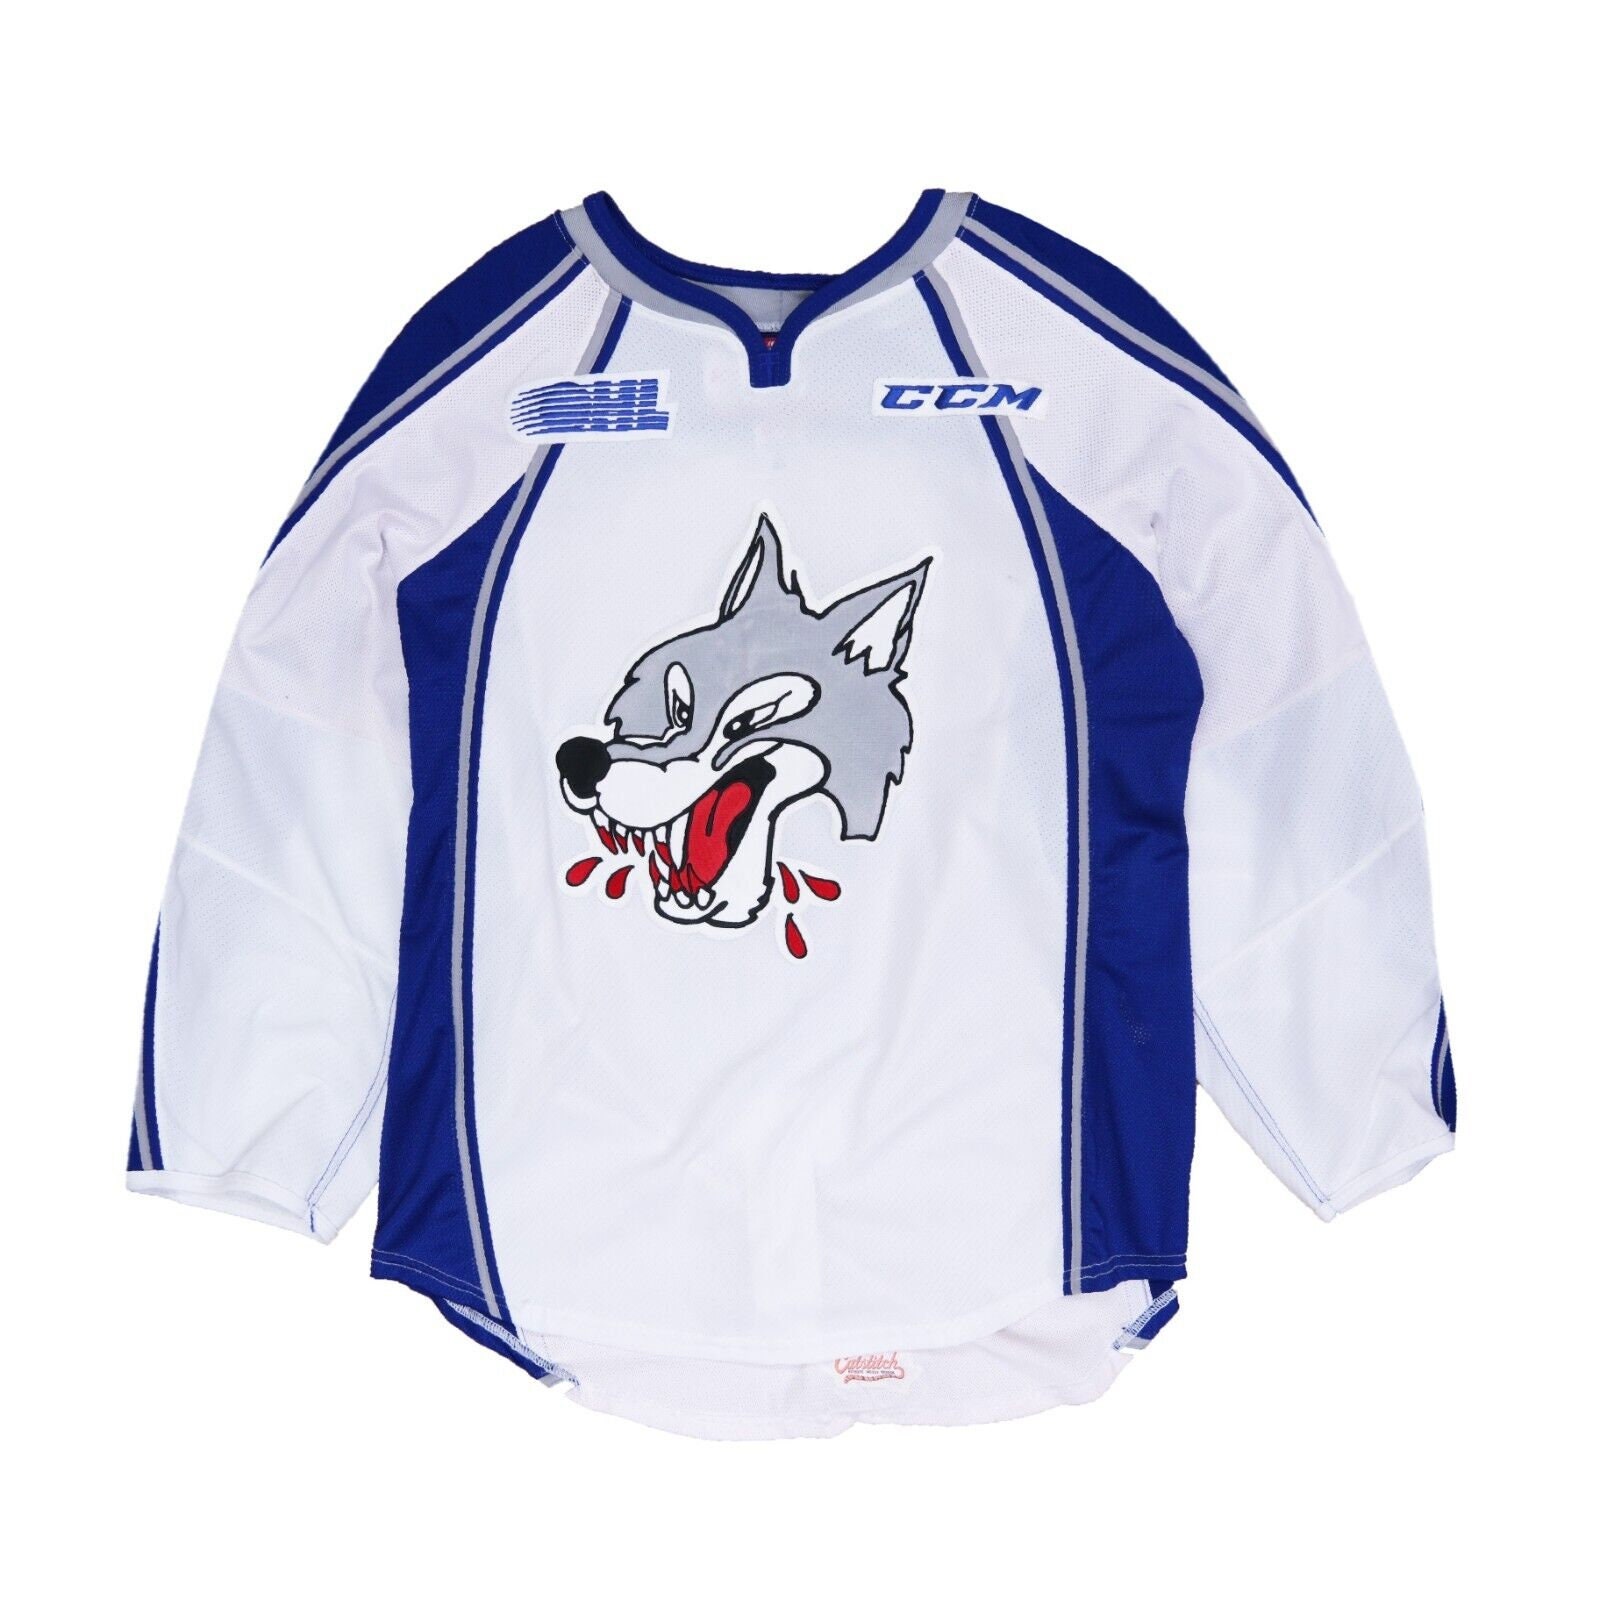 the sudbury wolves will wear 'shoresy' themed jerseys at an